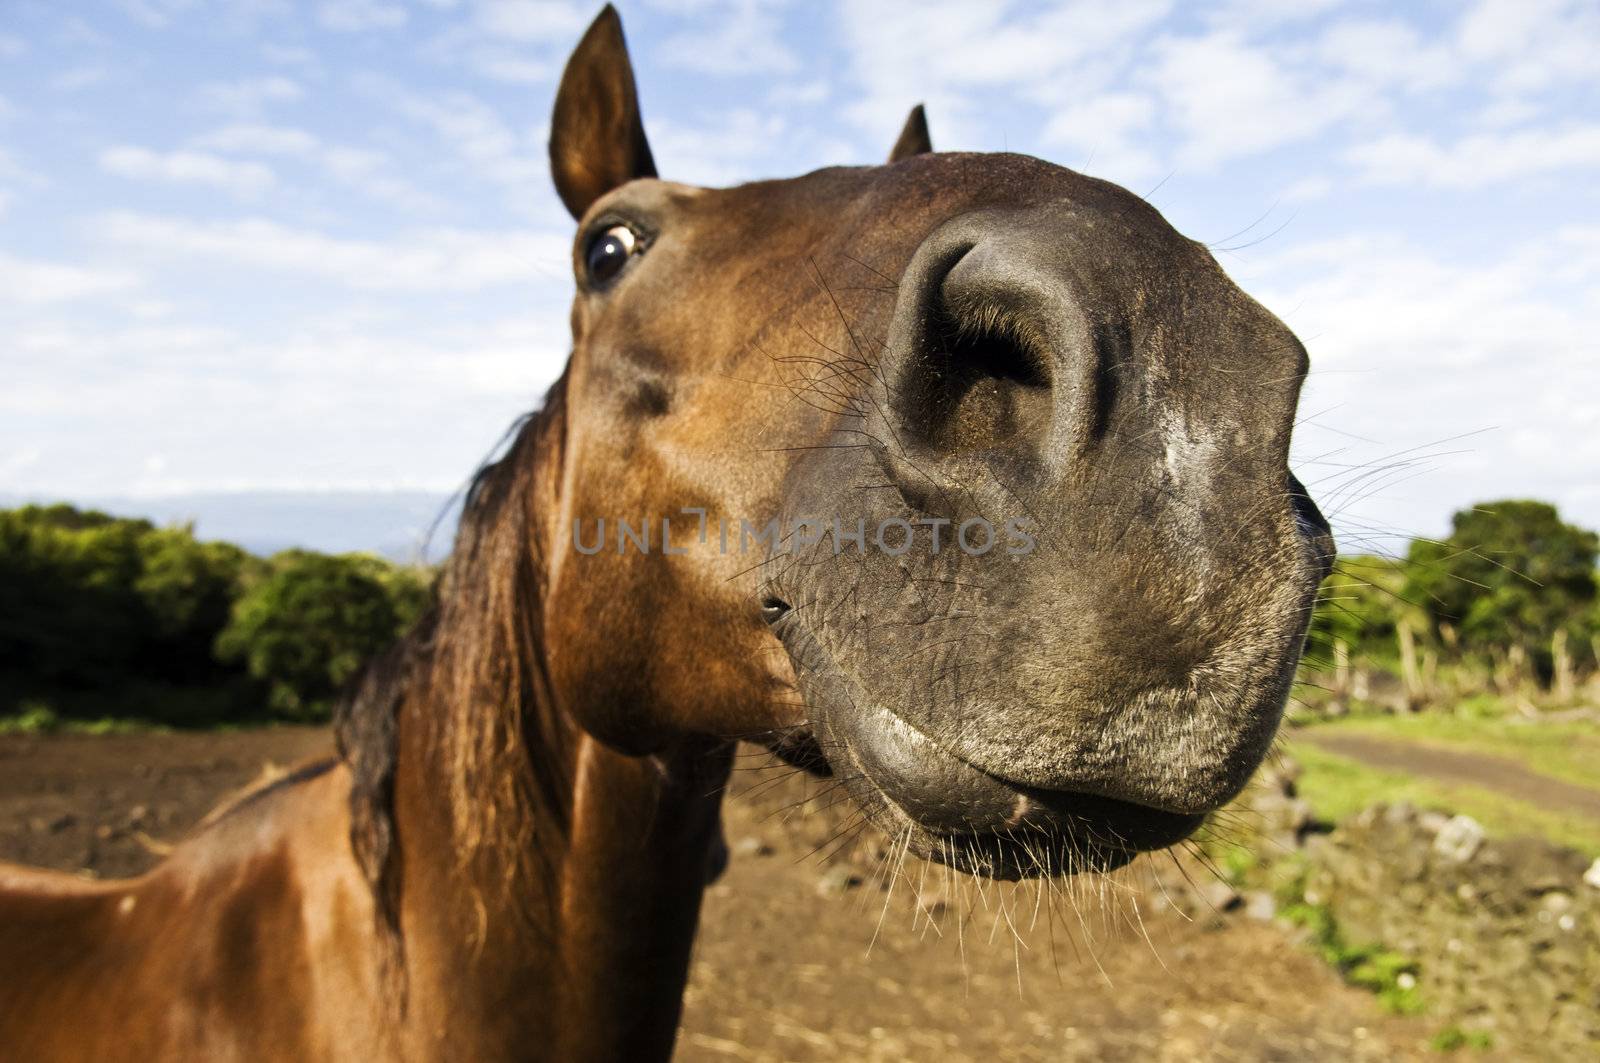 Inquisitive horse by mrfotos